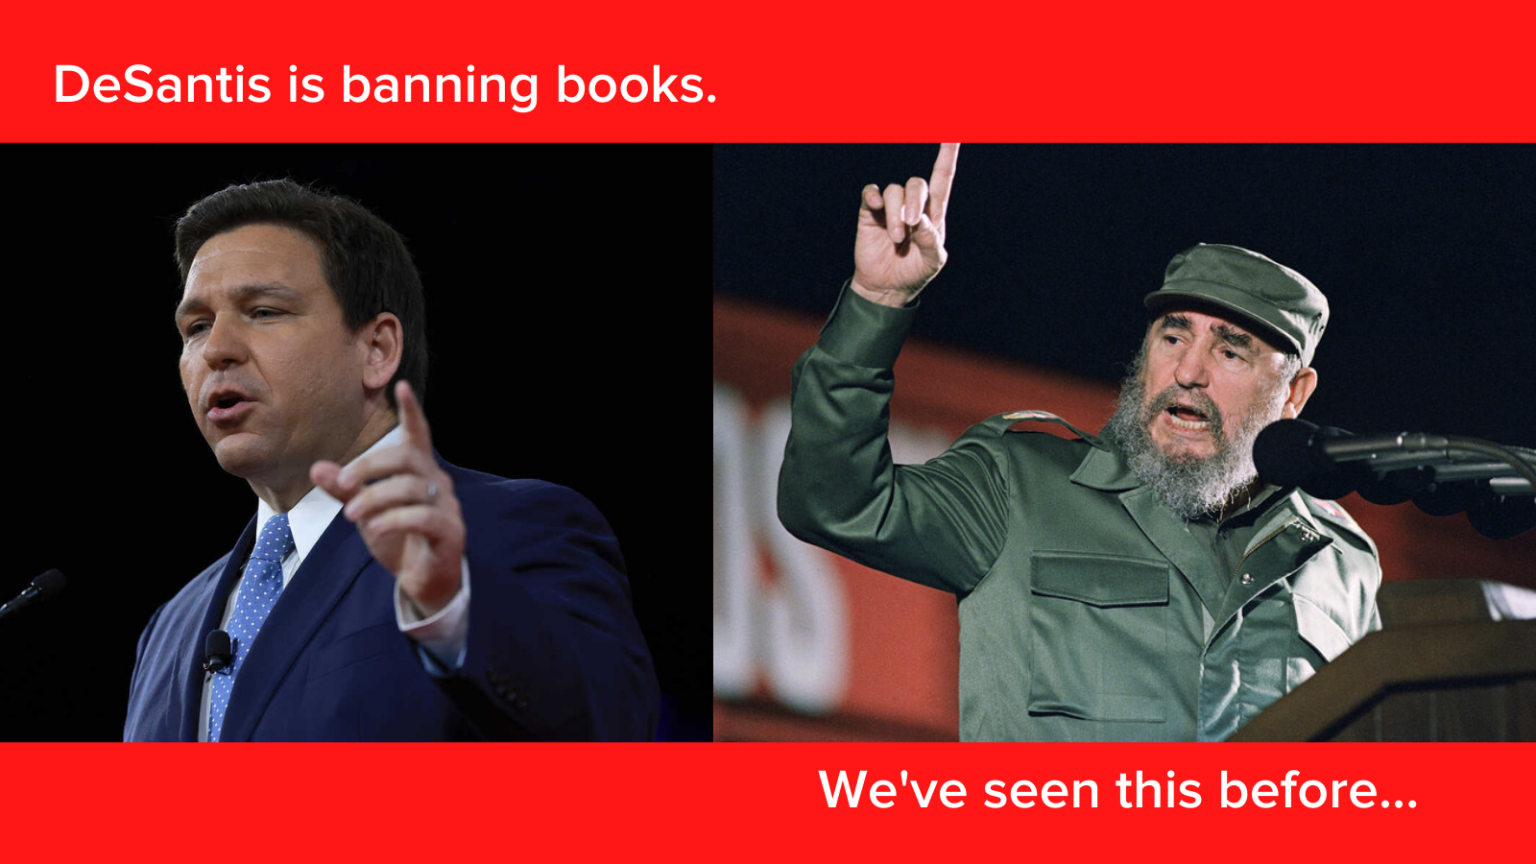 DeSantis כמו קסטרו אוסר ספרים